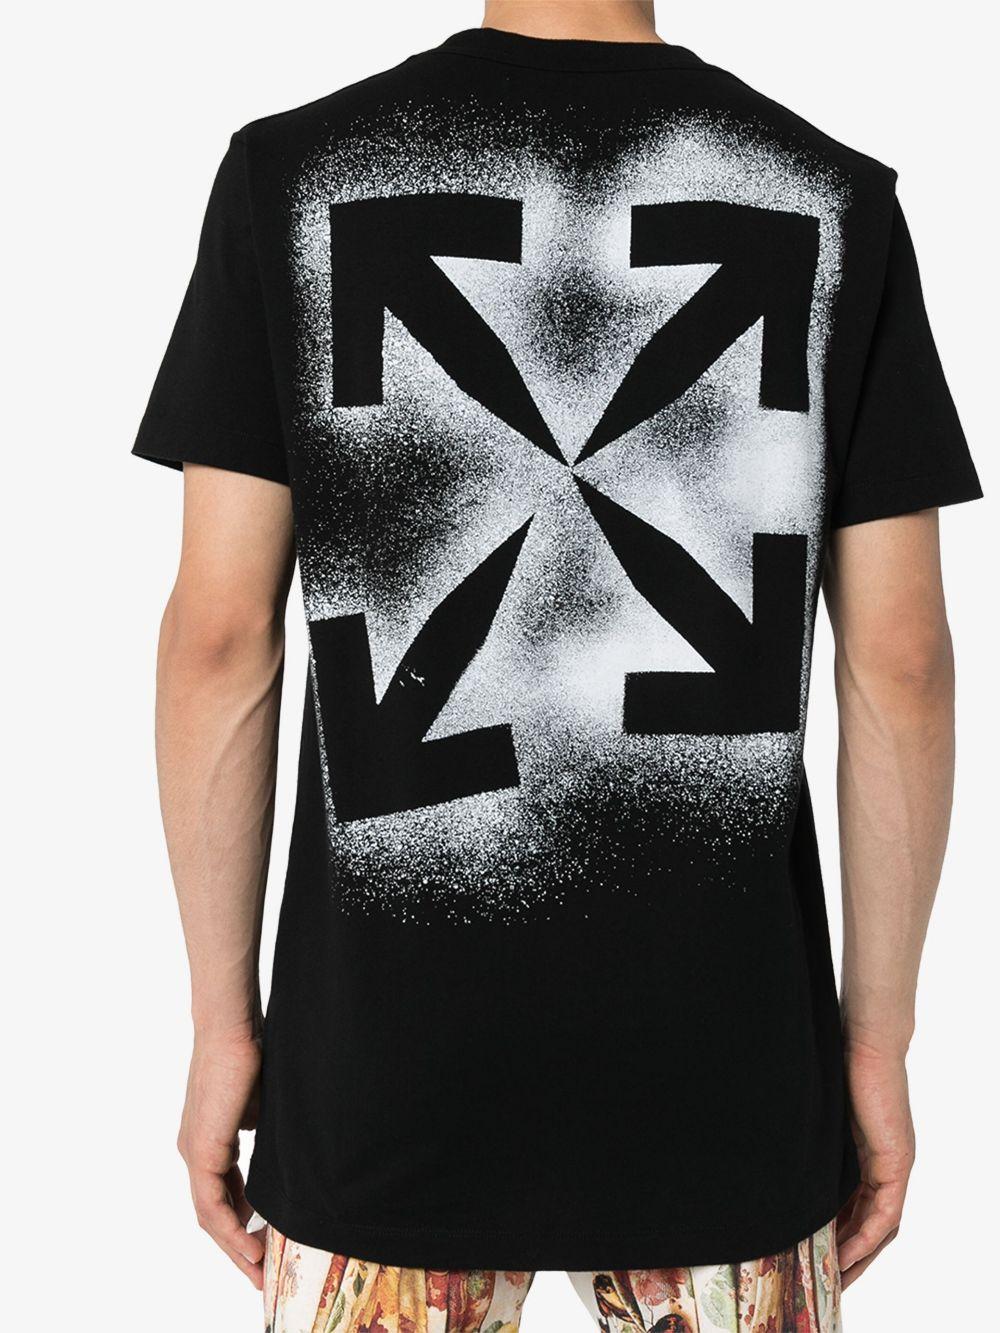 Off-White c/o Virgil Abloh Arch Shapes Slim Fit T-shirt In Black